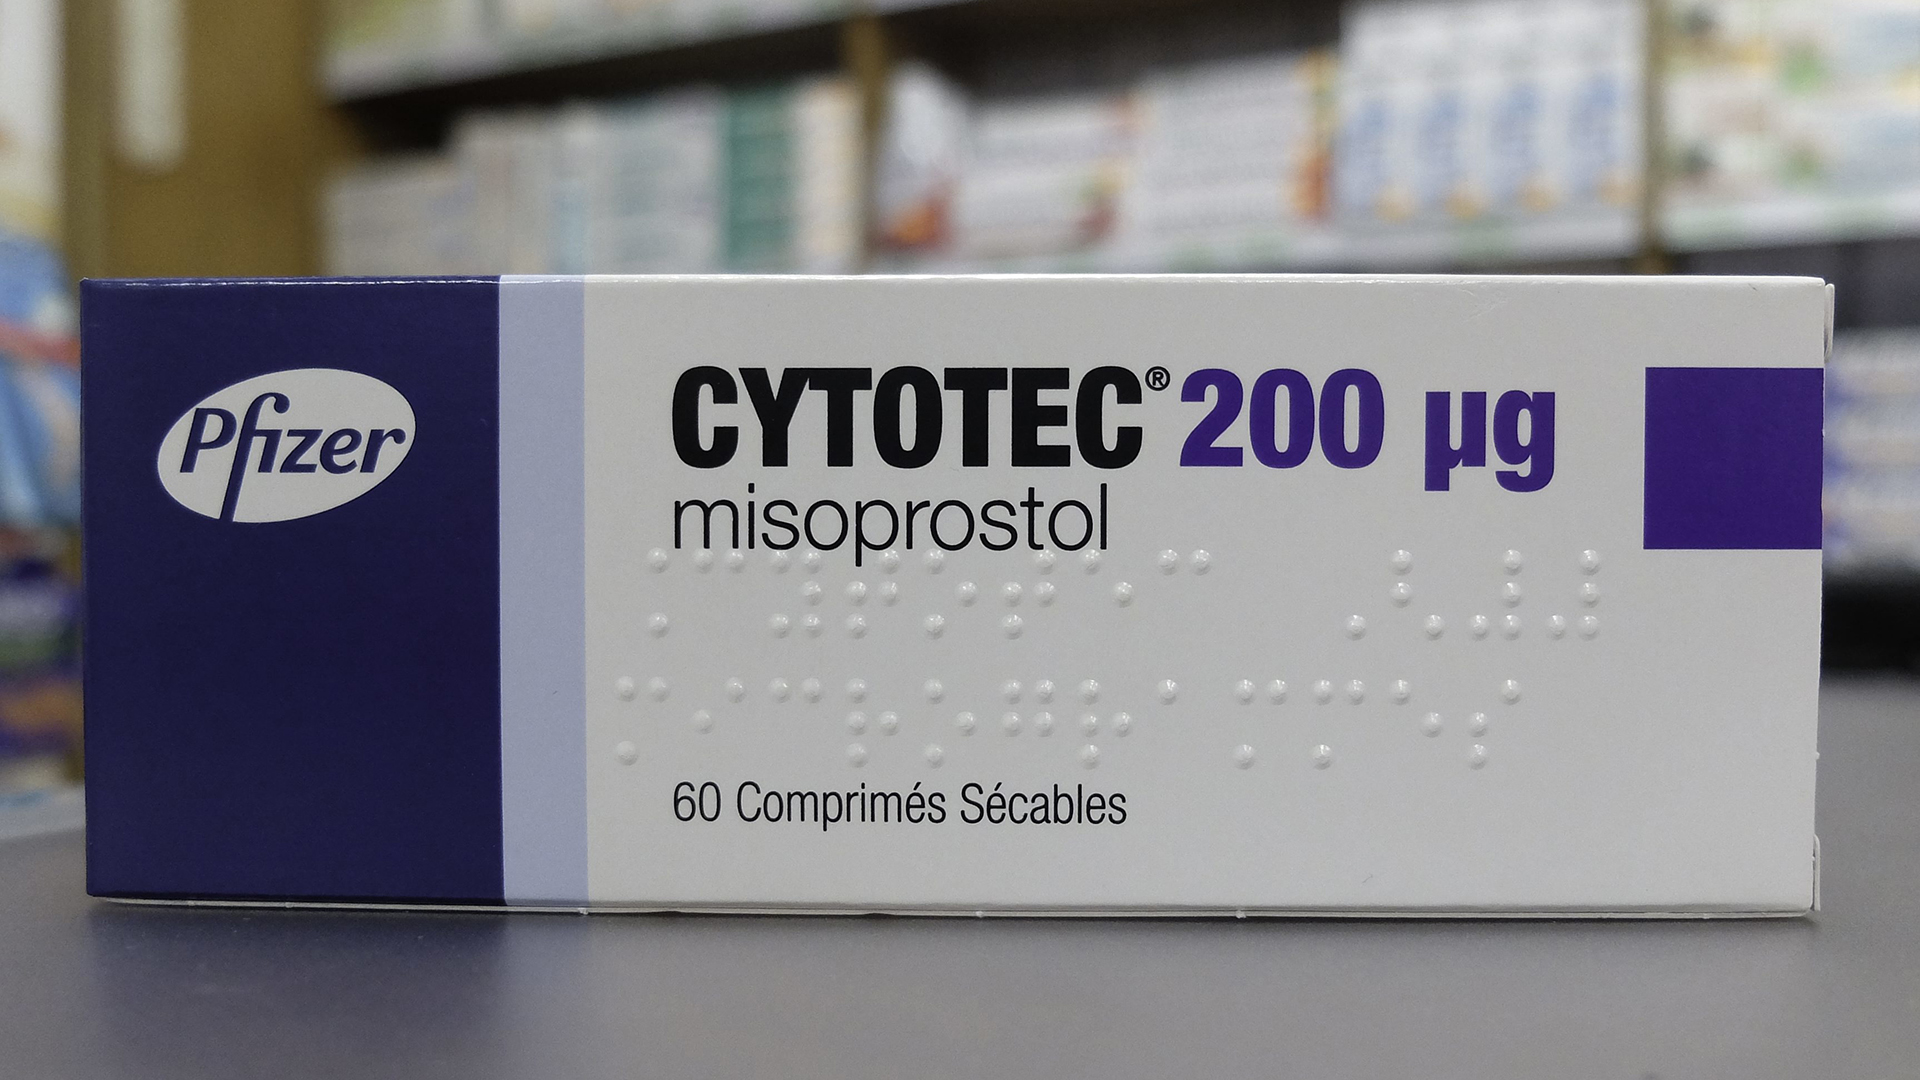 Das Medikament Cytotec | picture alliance / MAXPPP